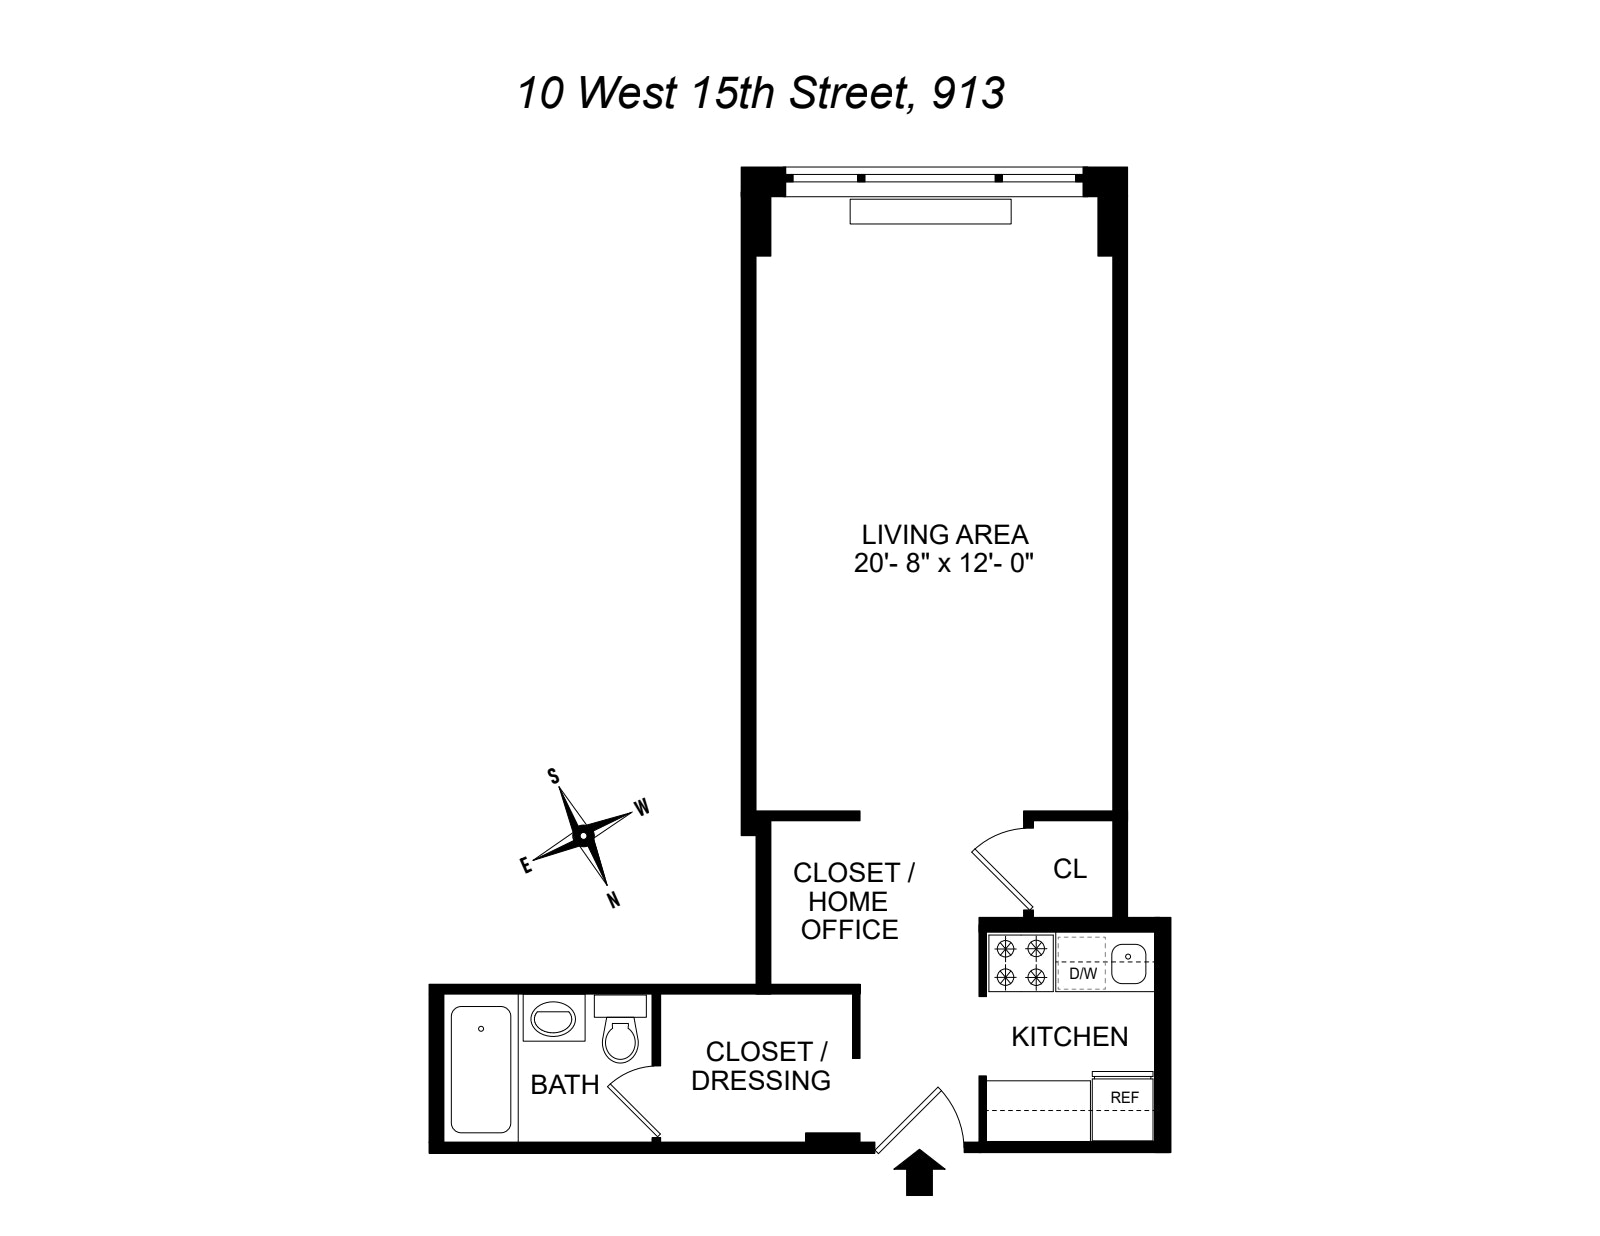 Floorplan for 10 West 15th Street, 913